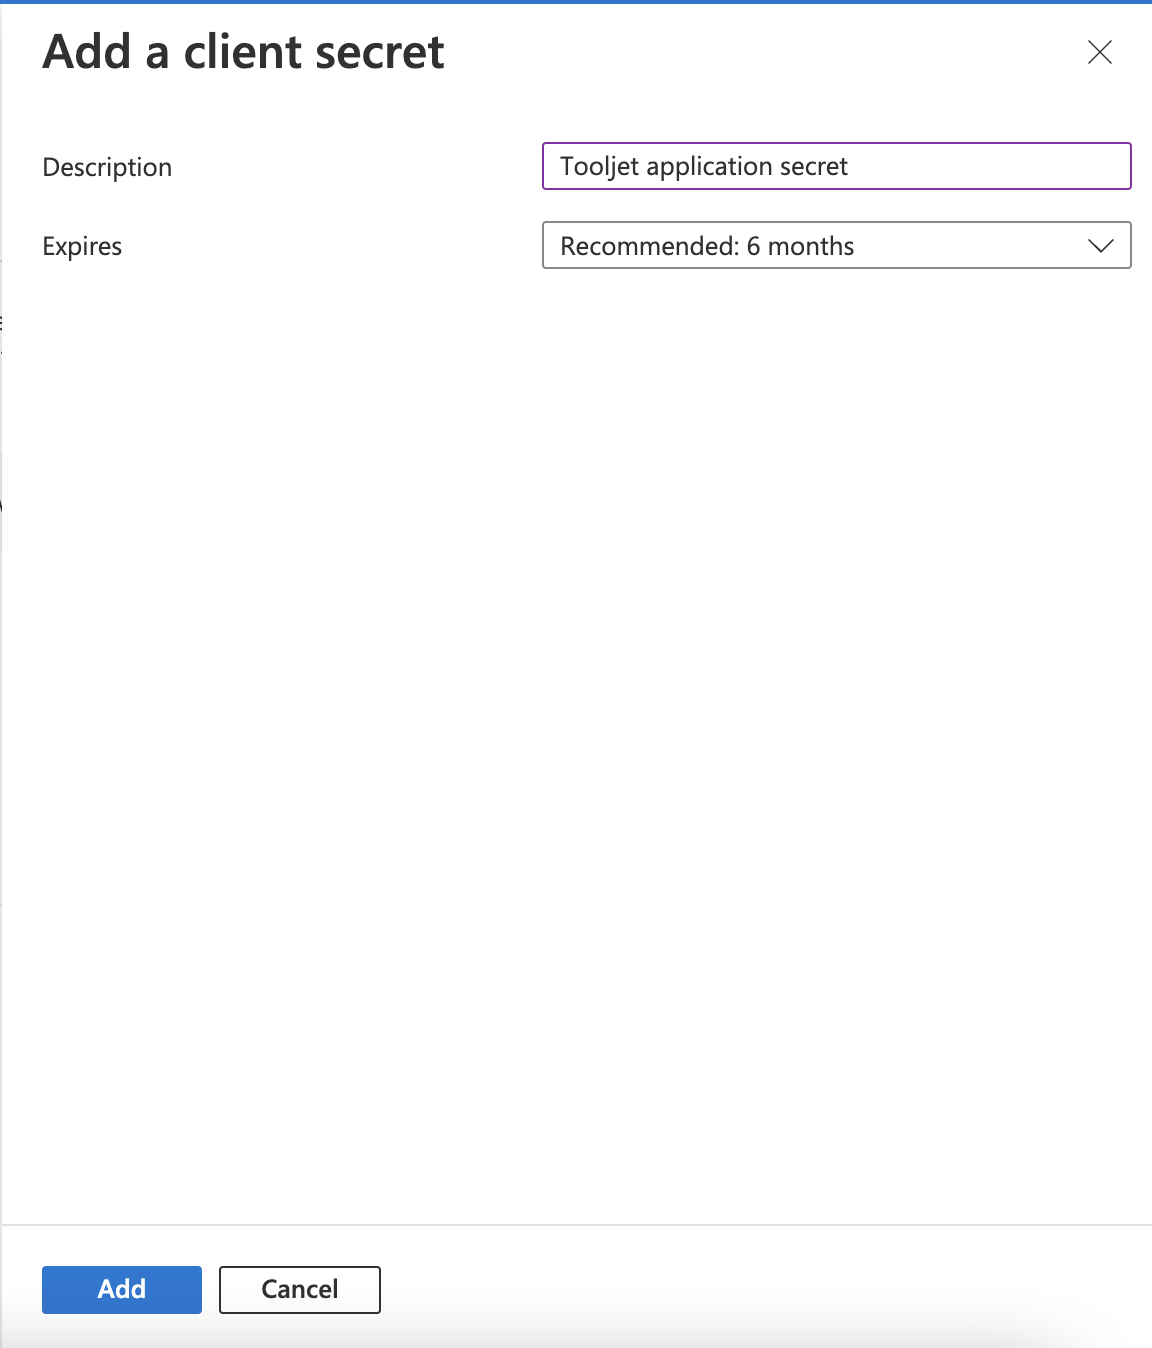 ToolJet - AzureAD app registration